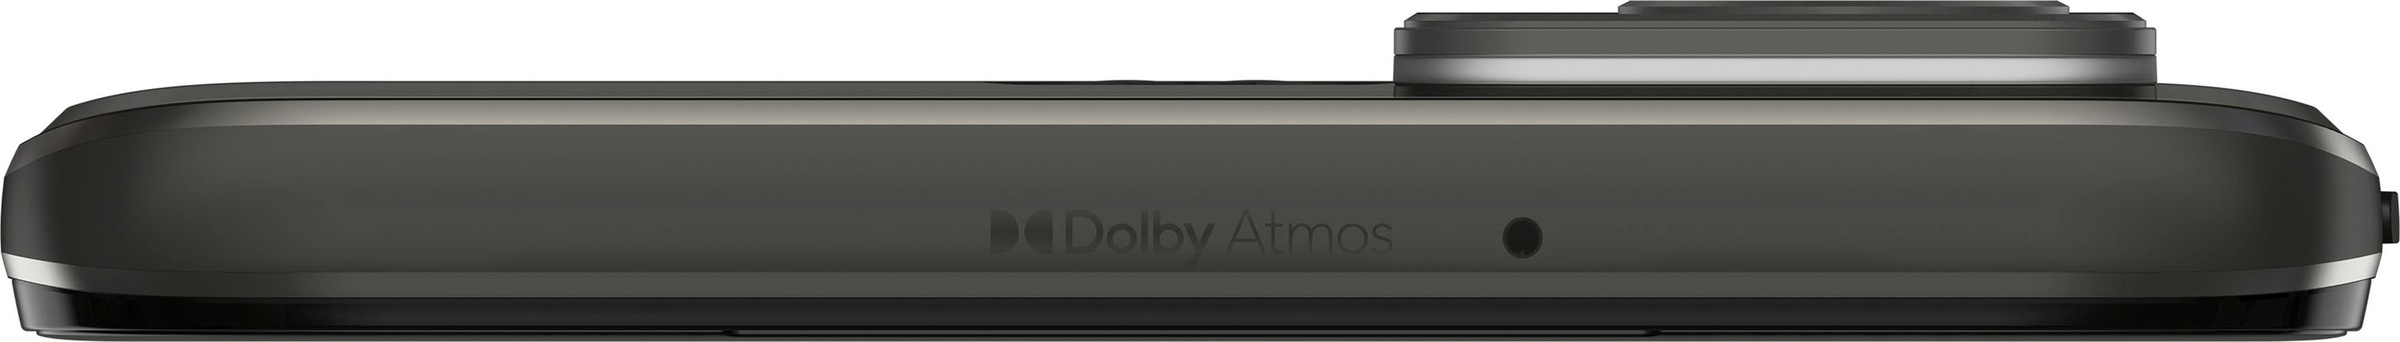 Motorola Smartphone »Edge 30 Neo 256 GB«, schwarz, 16 cm/6,3 Zoll, 256 GB Speicherplatz, 64 MP Kamera